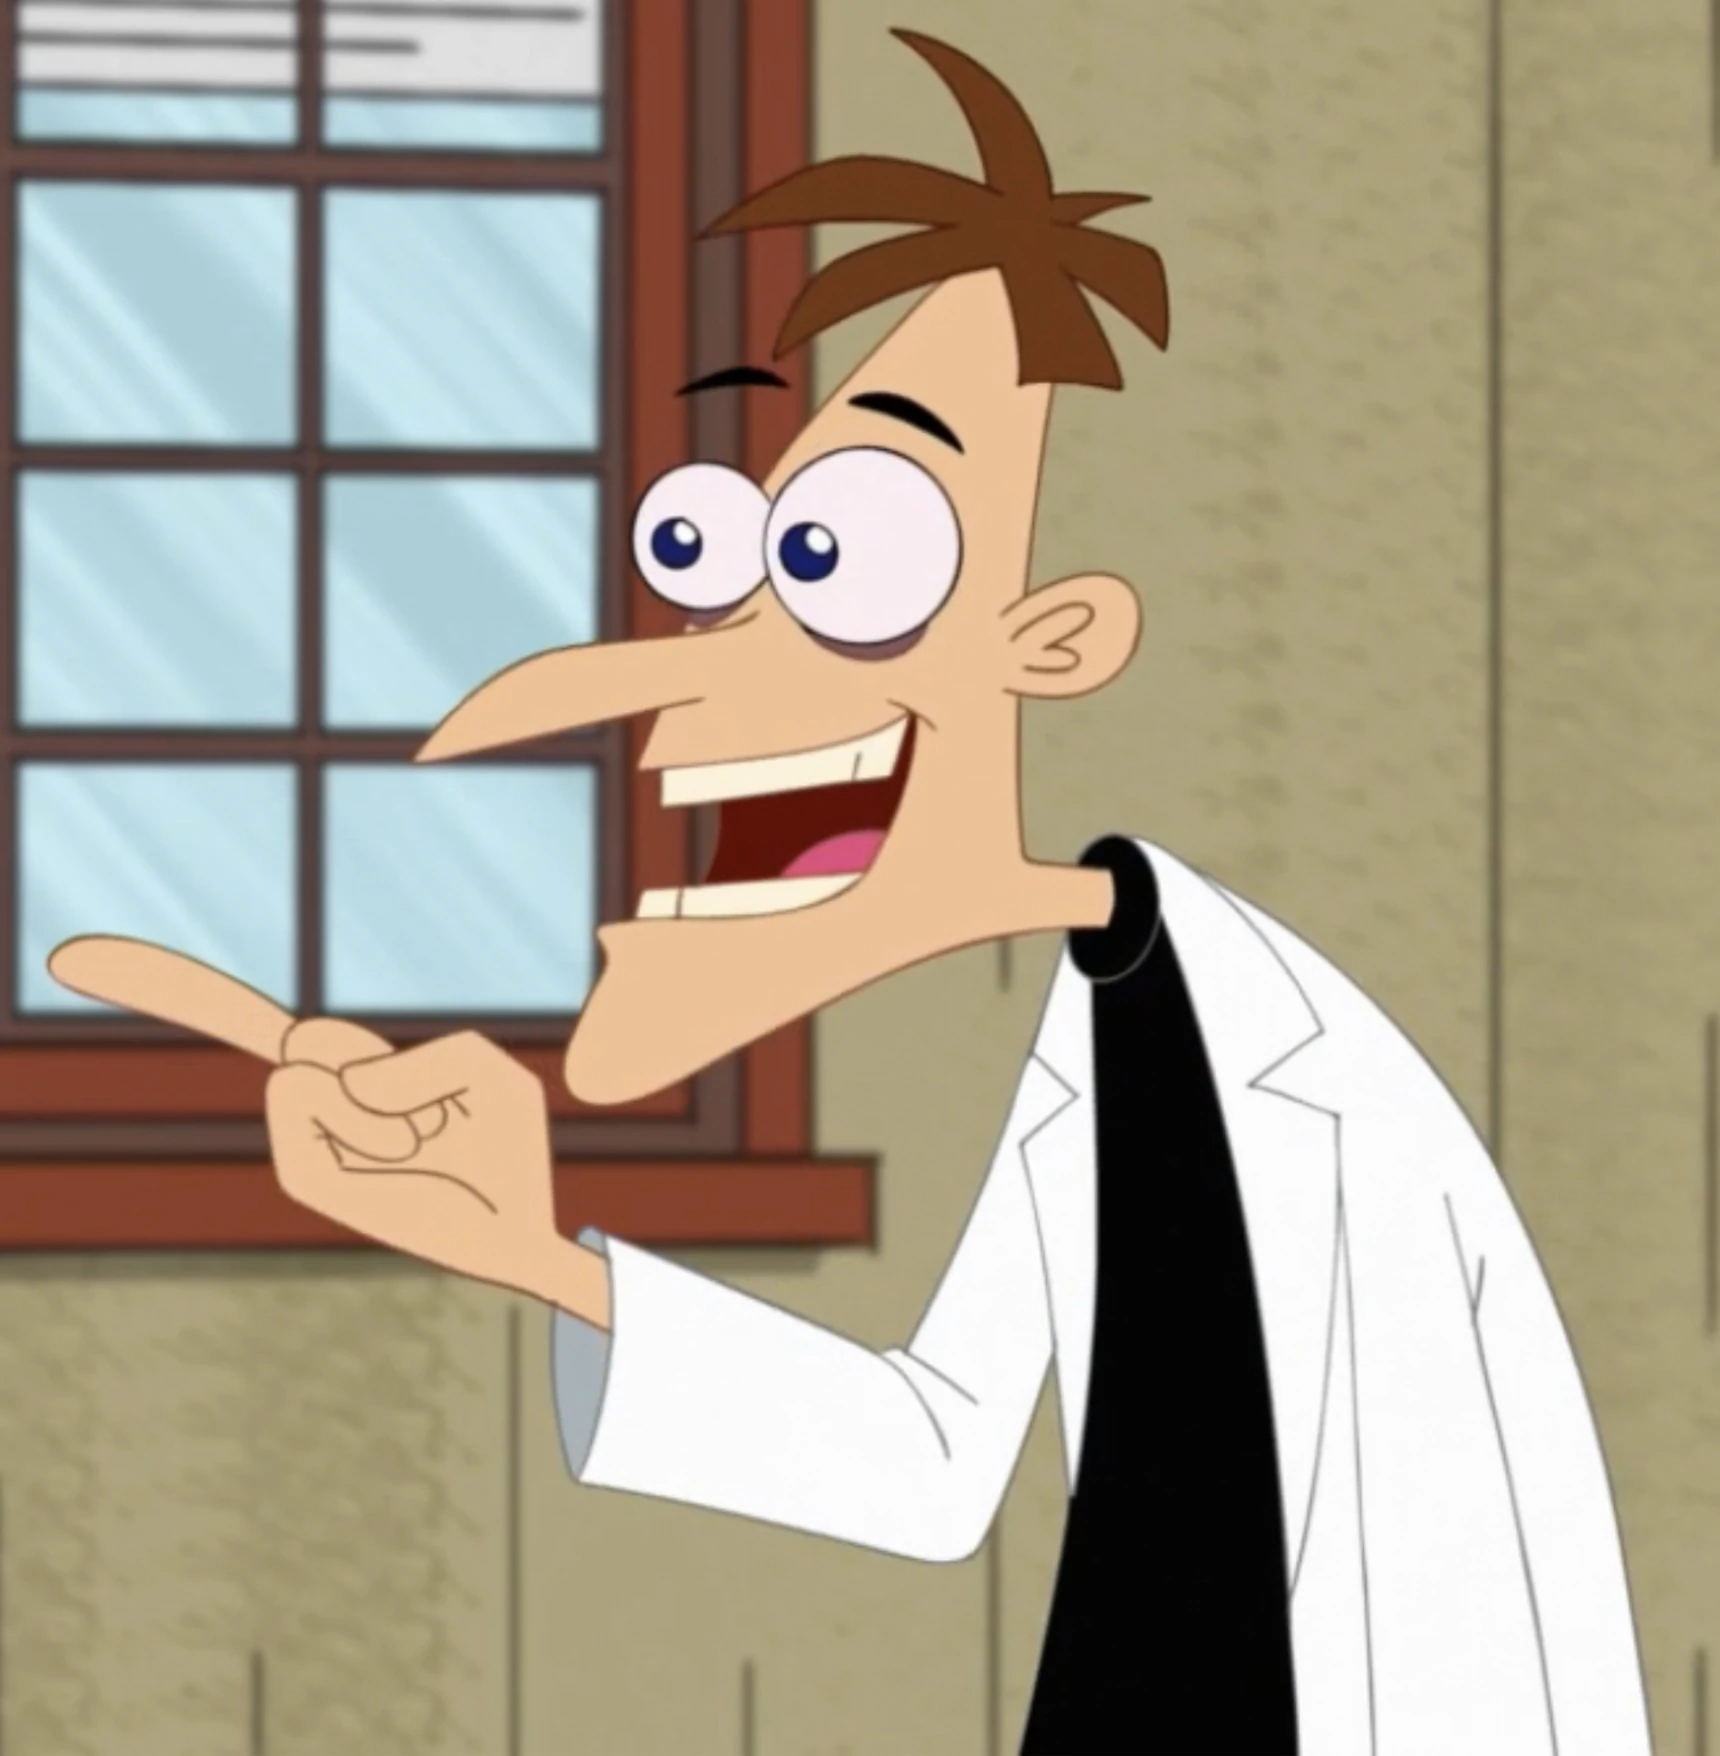 Dr. Doofenshmirtz (Phineas and Ferb) Costume